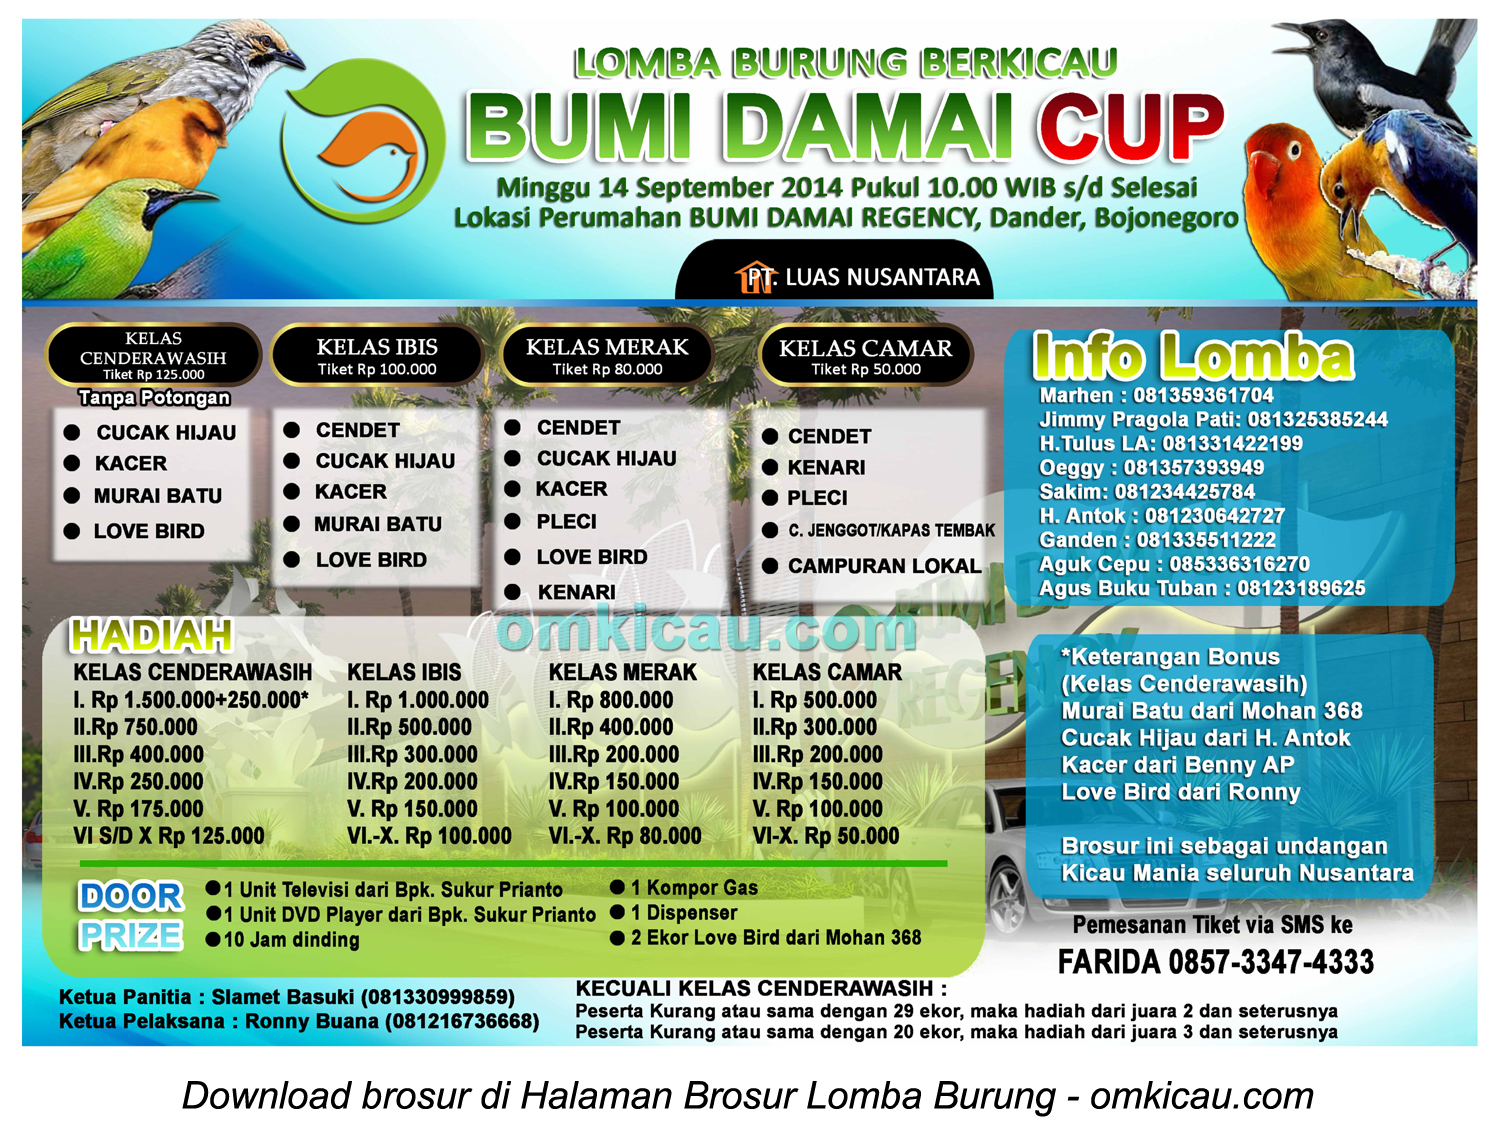 Brosur Lomba Burung Berkicau Bumi Damai Cup, Bojonegoro, 14 September 2014